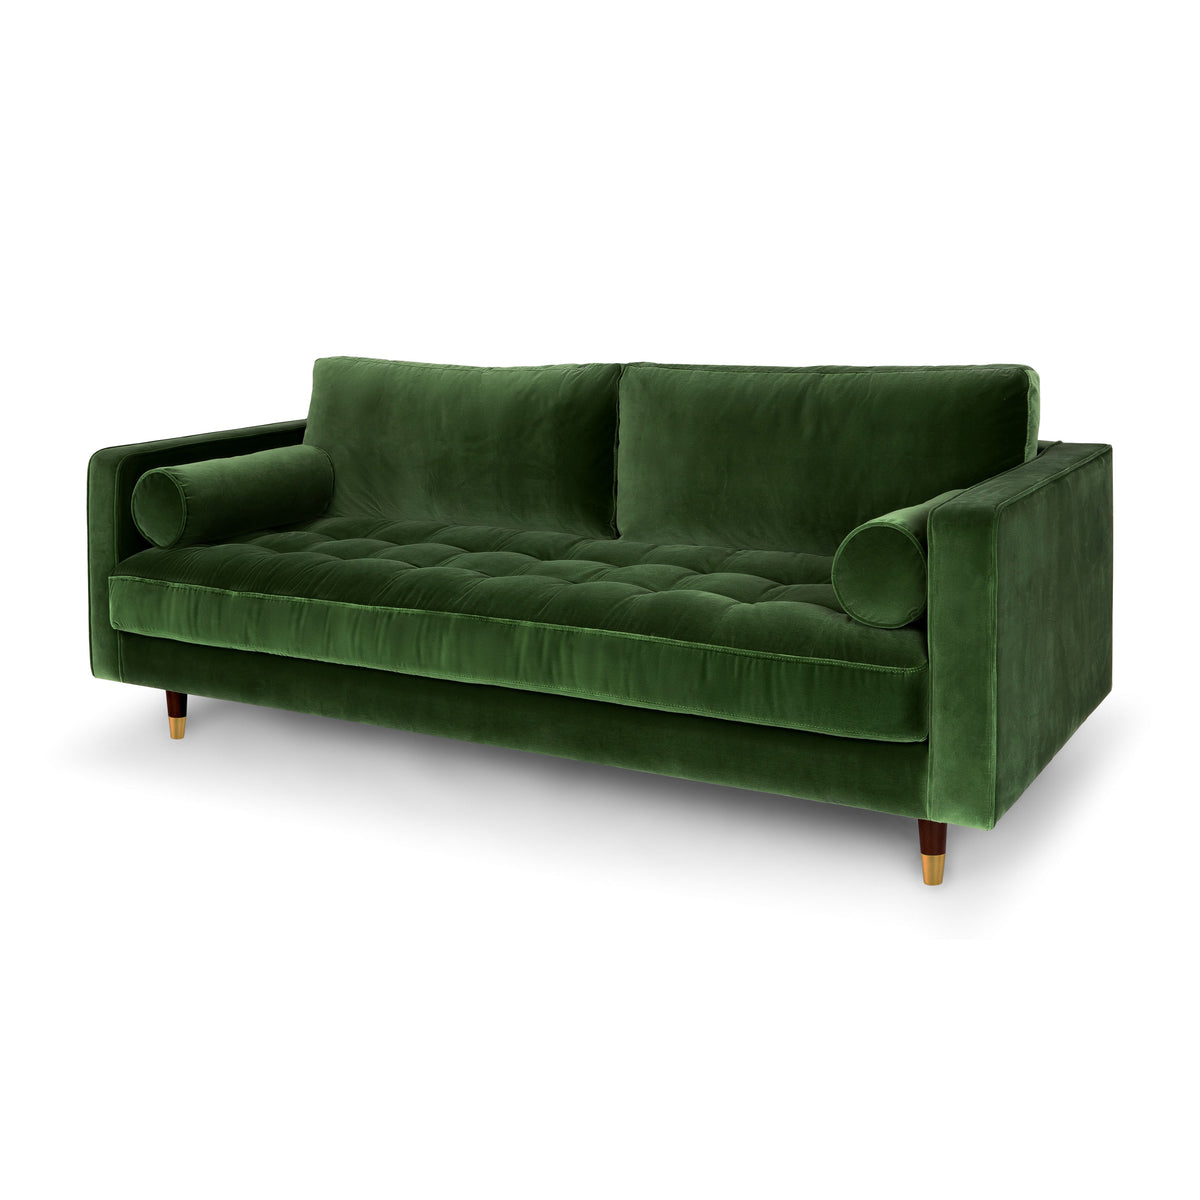 Marlowe 3 Seater Sofa